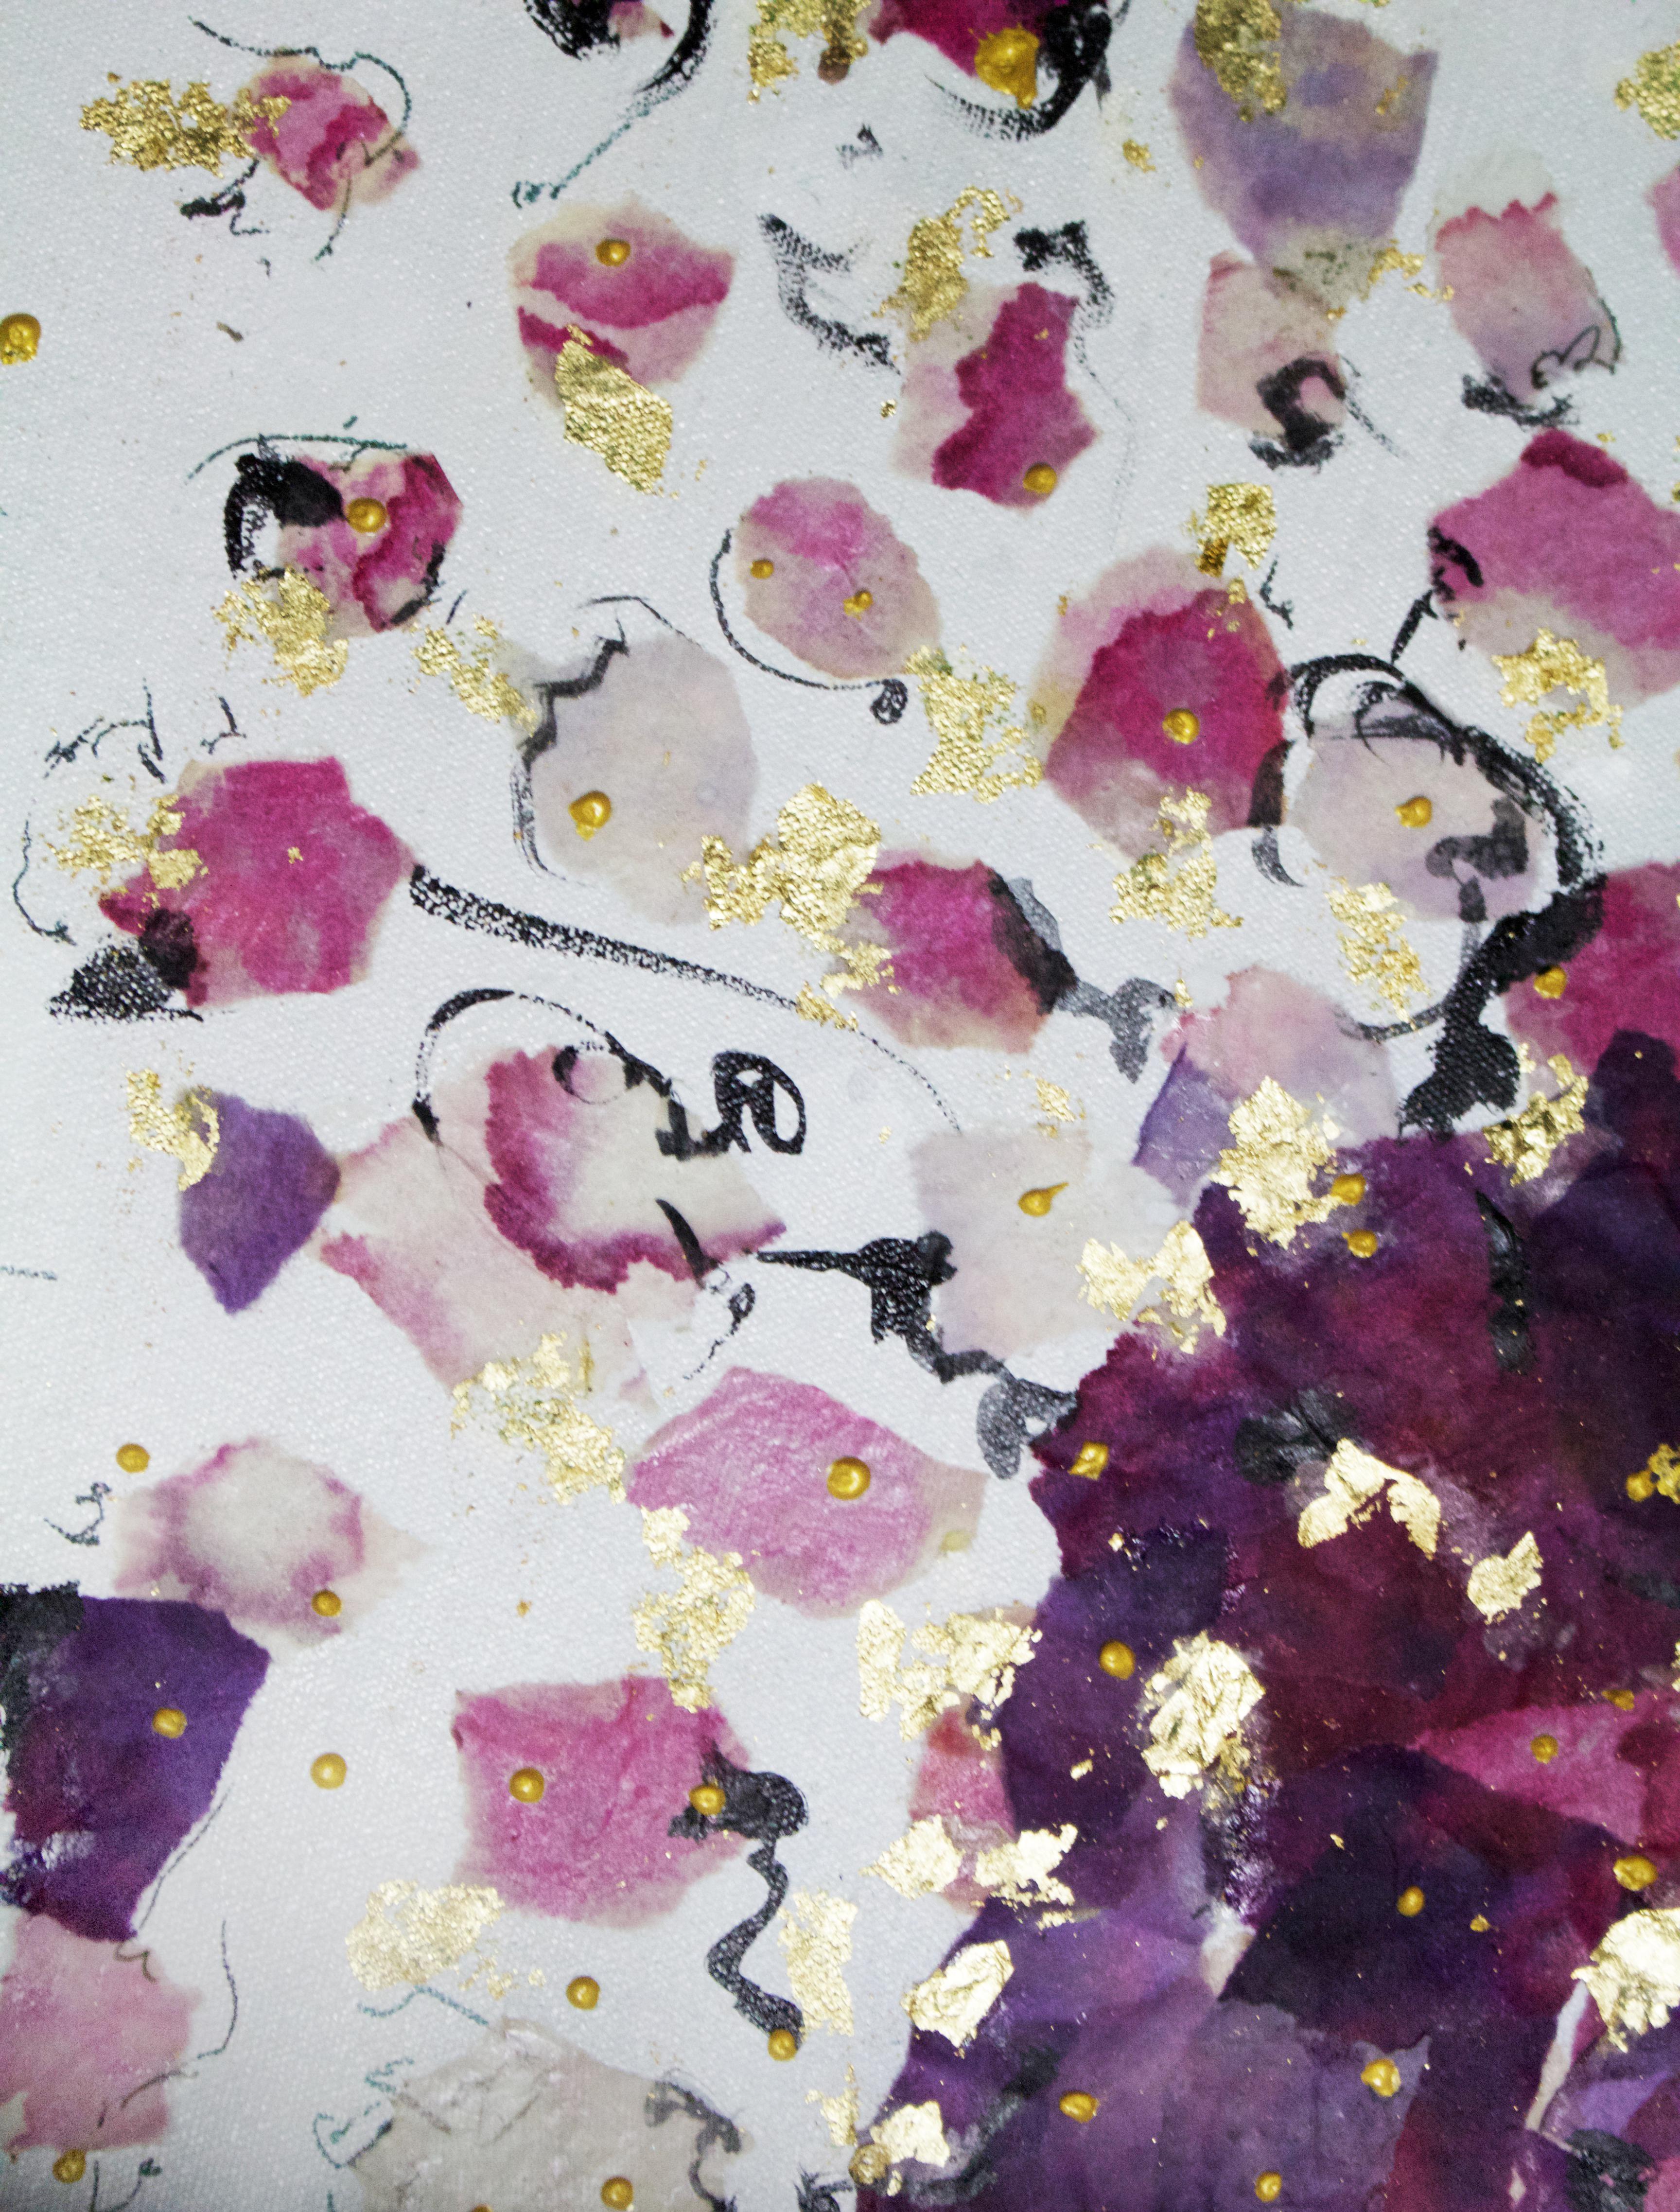 Hibiscus Tea Series: Lotus  - Gold Abstract Painting by Saya Behnam